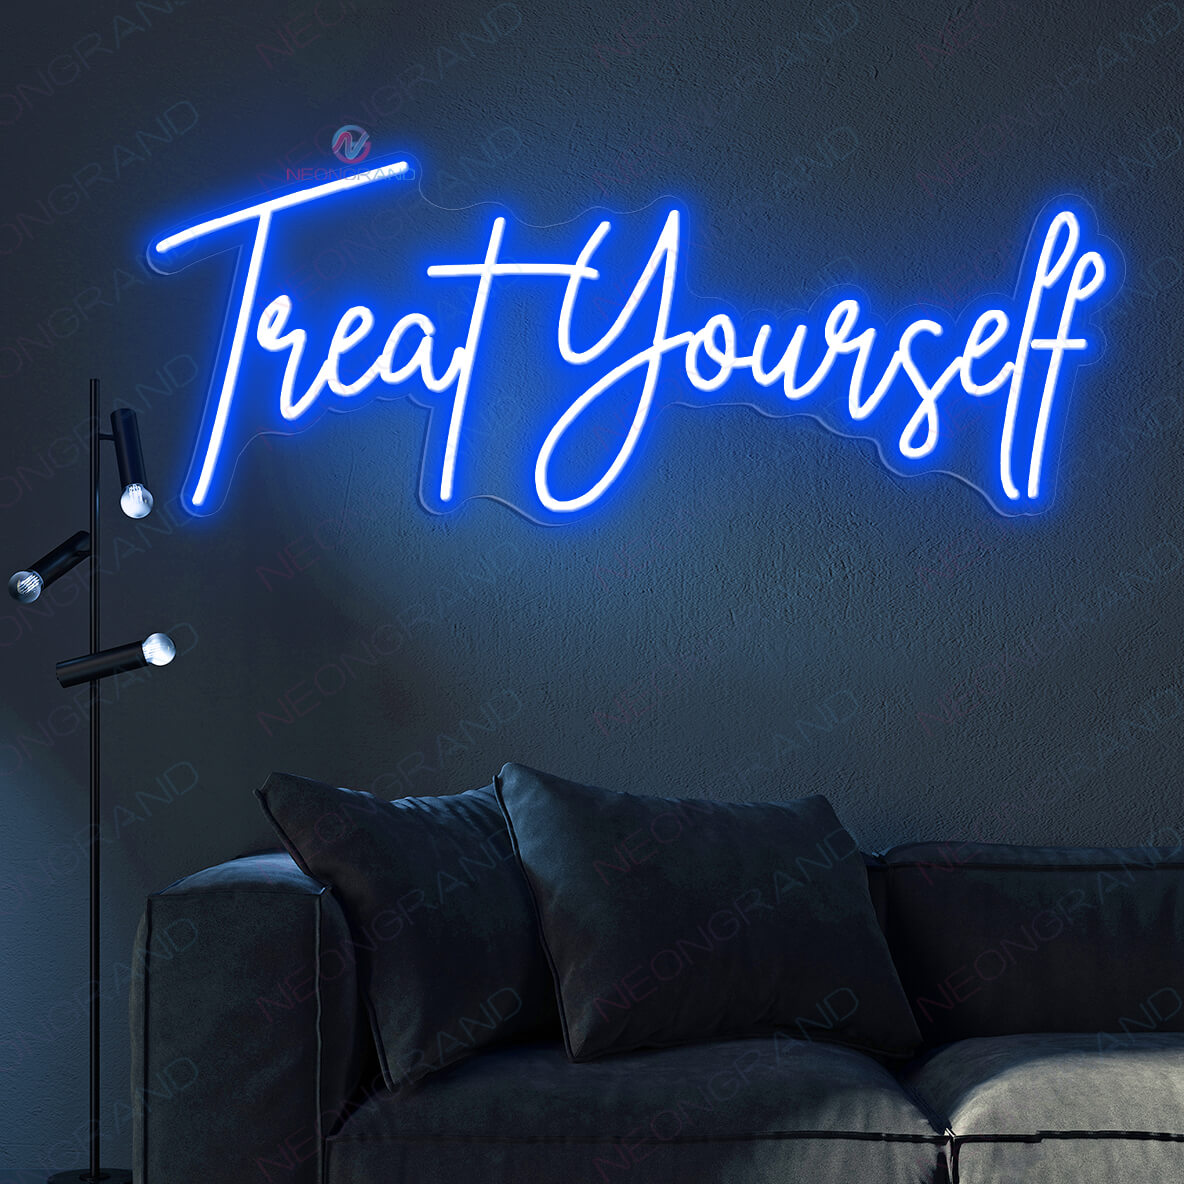 Treat Yourself Neon Sign Motivation Led Light blue